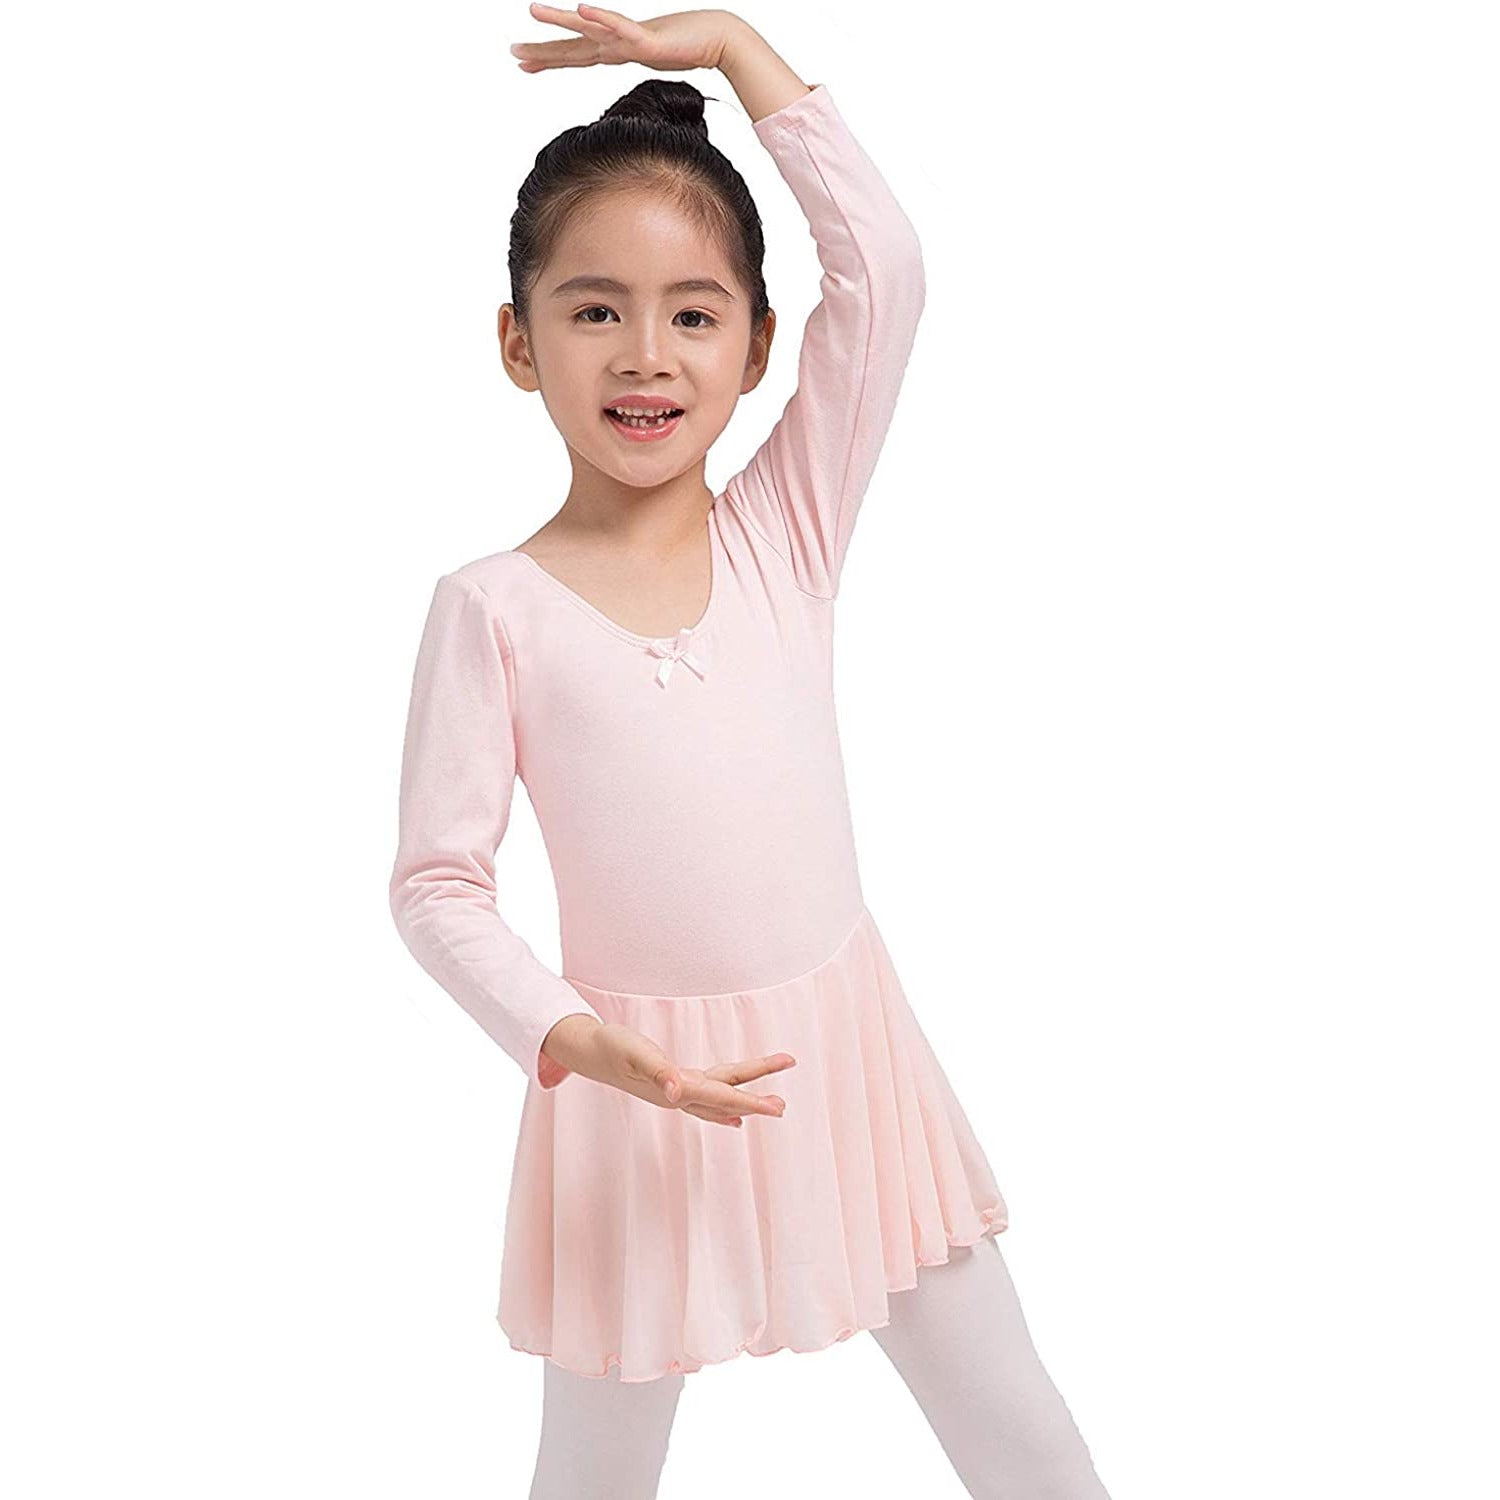 Dancina Girls Skirted Ballet Leotard Dance Dress Long Sleeve Cotton Front Lined in Ballet Pink